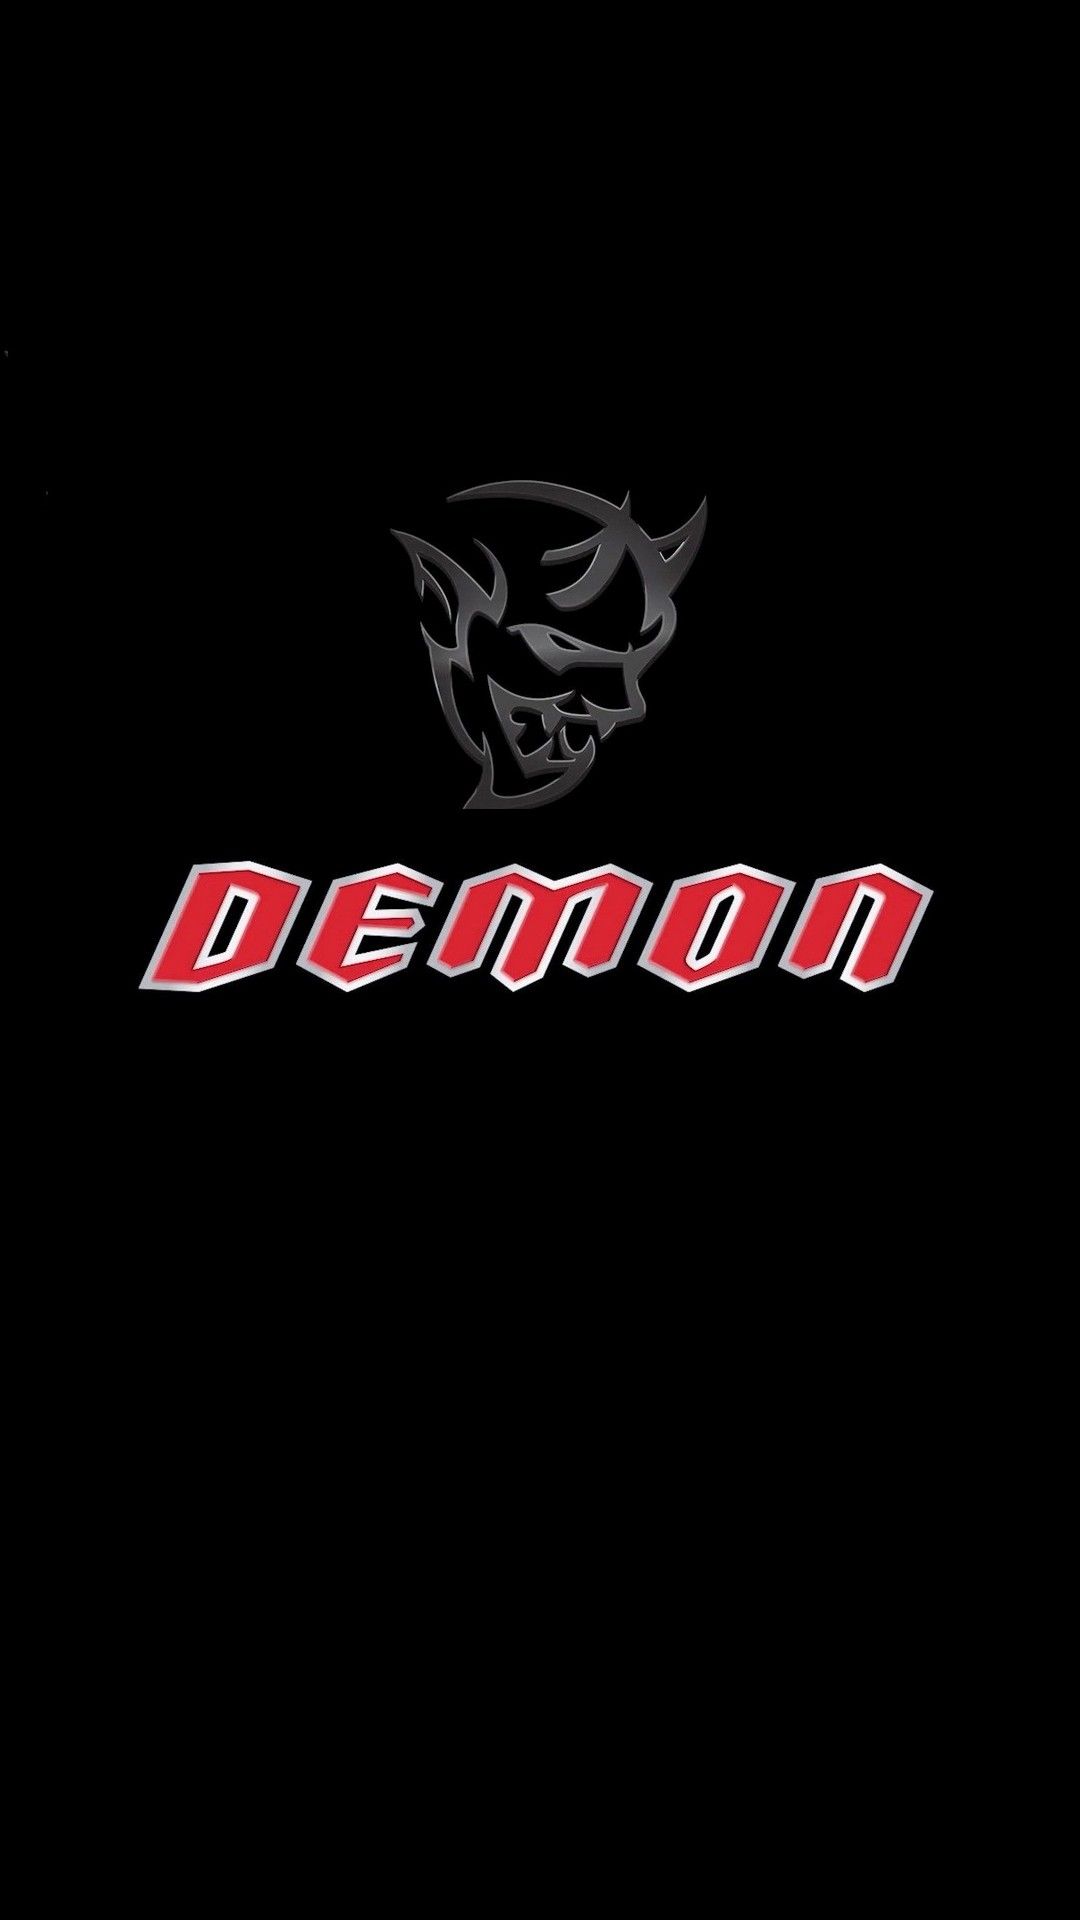 Dodge Demon Logo iPhone Wallpaper iPhonewallpaper